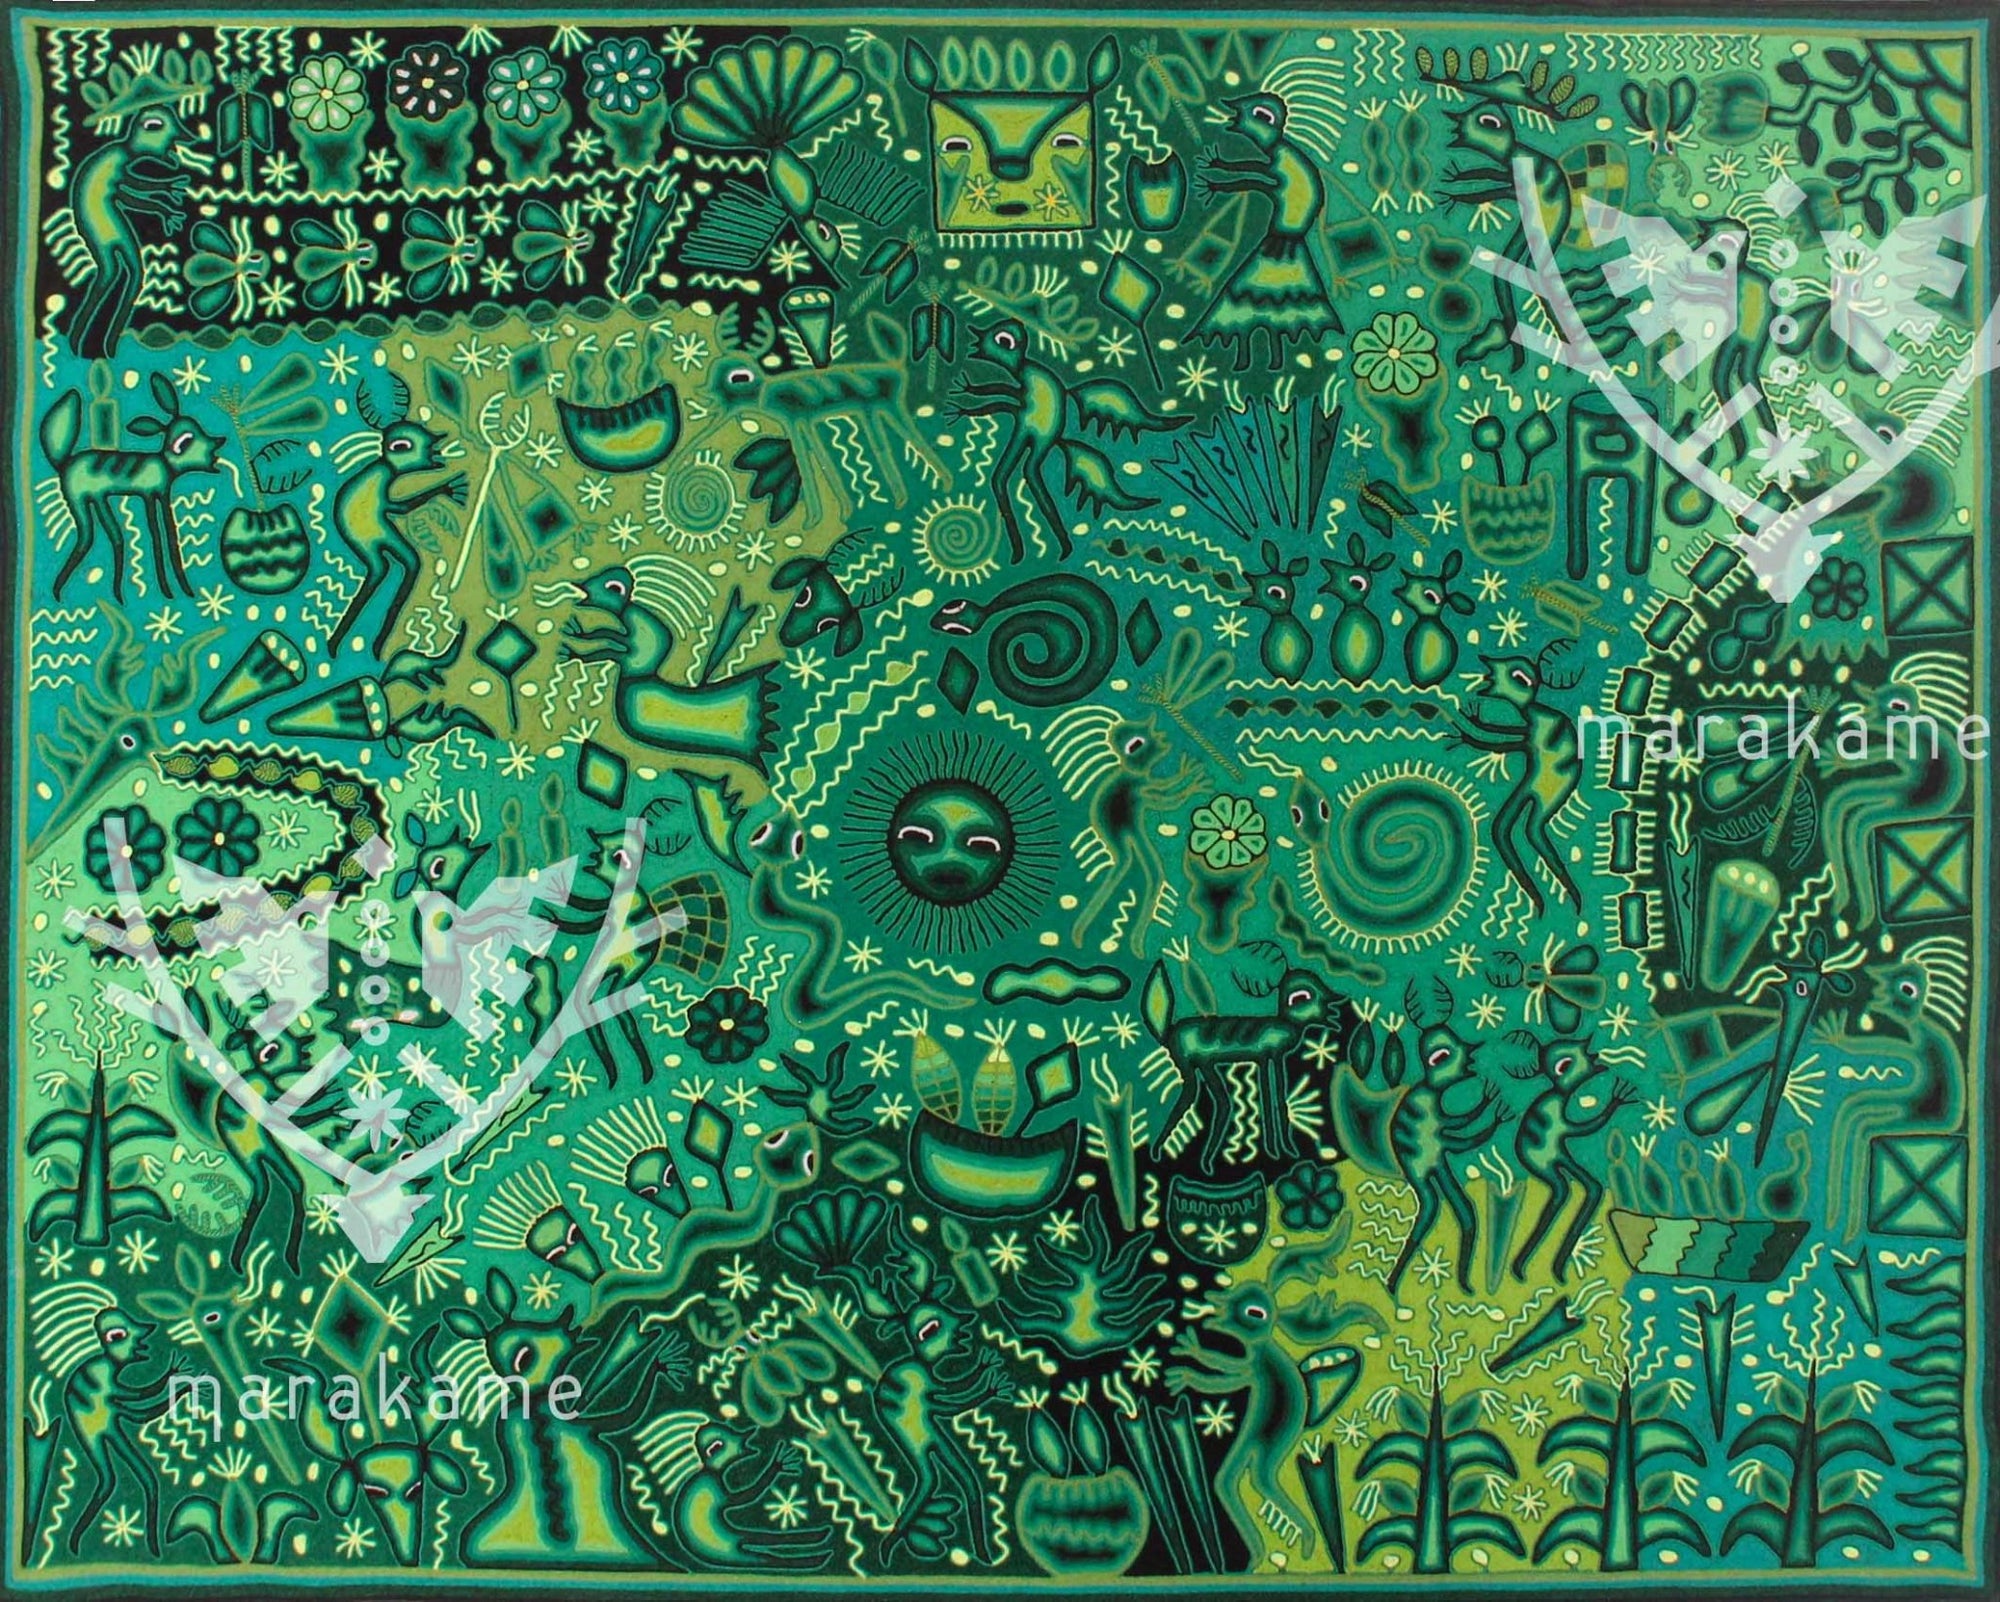 Nierika de Estambre Cuadro Huichol - Tawexika - 150 x 120 cm. - Arte Huichol - Marakame